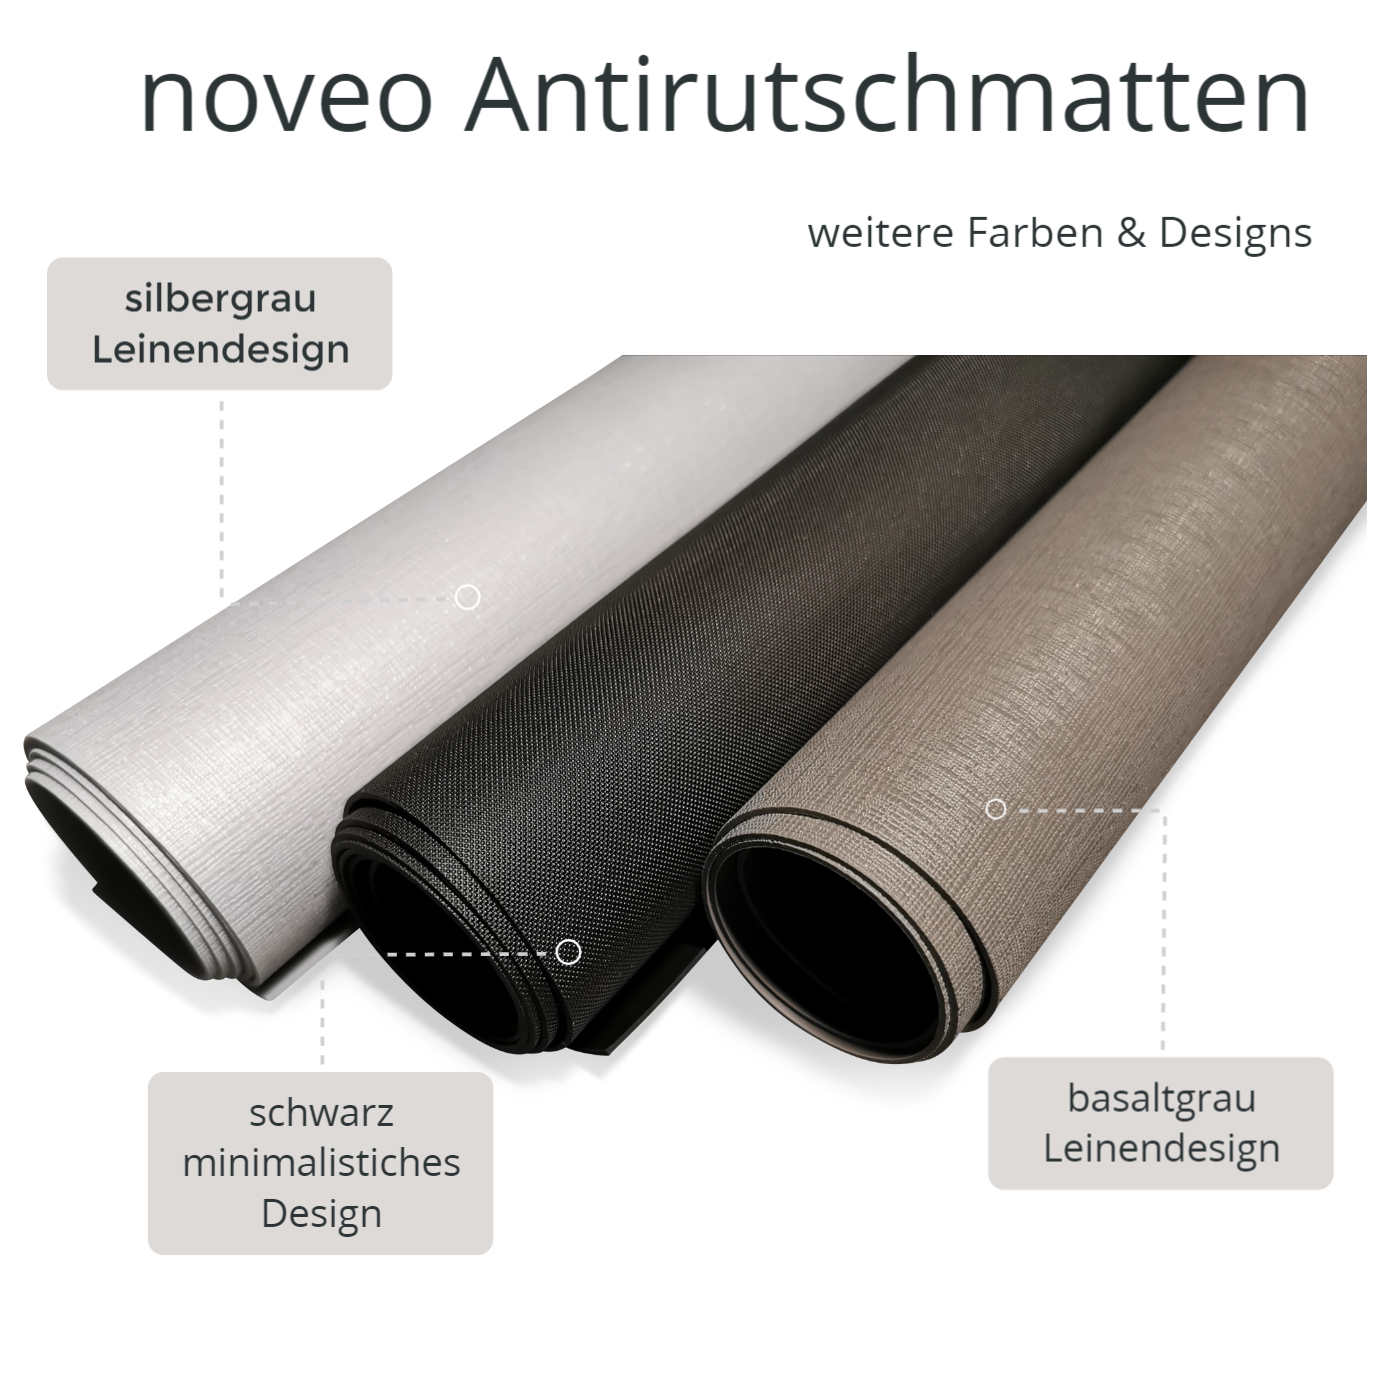 Hochwertige Antirutschmatte - Made in Germany!